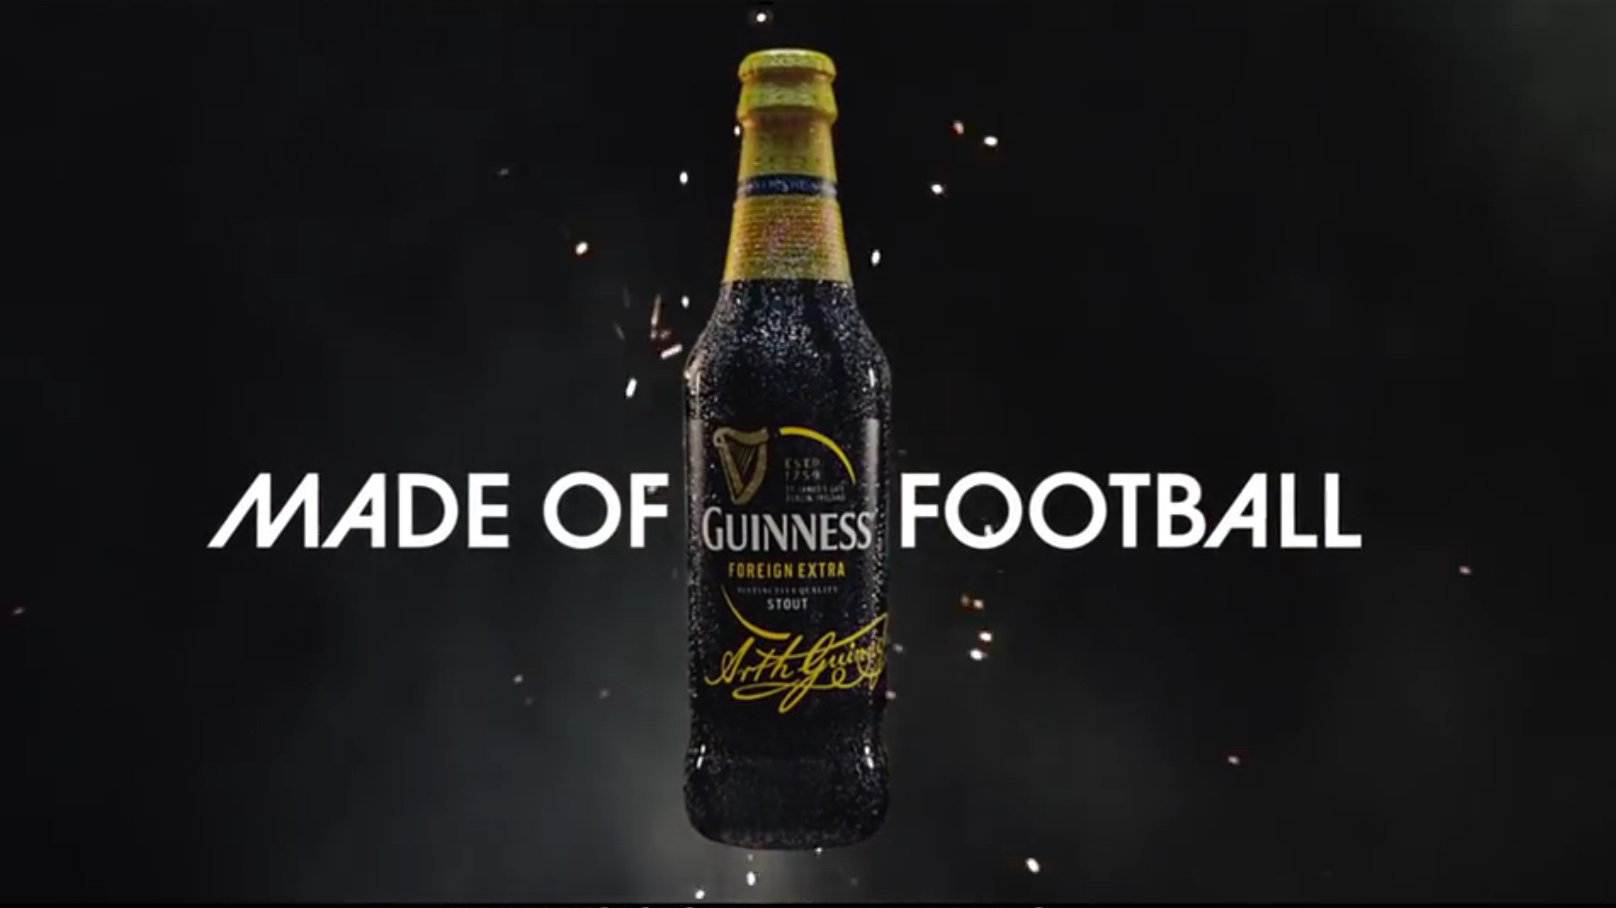 8. Guinness made of football